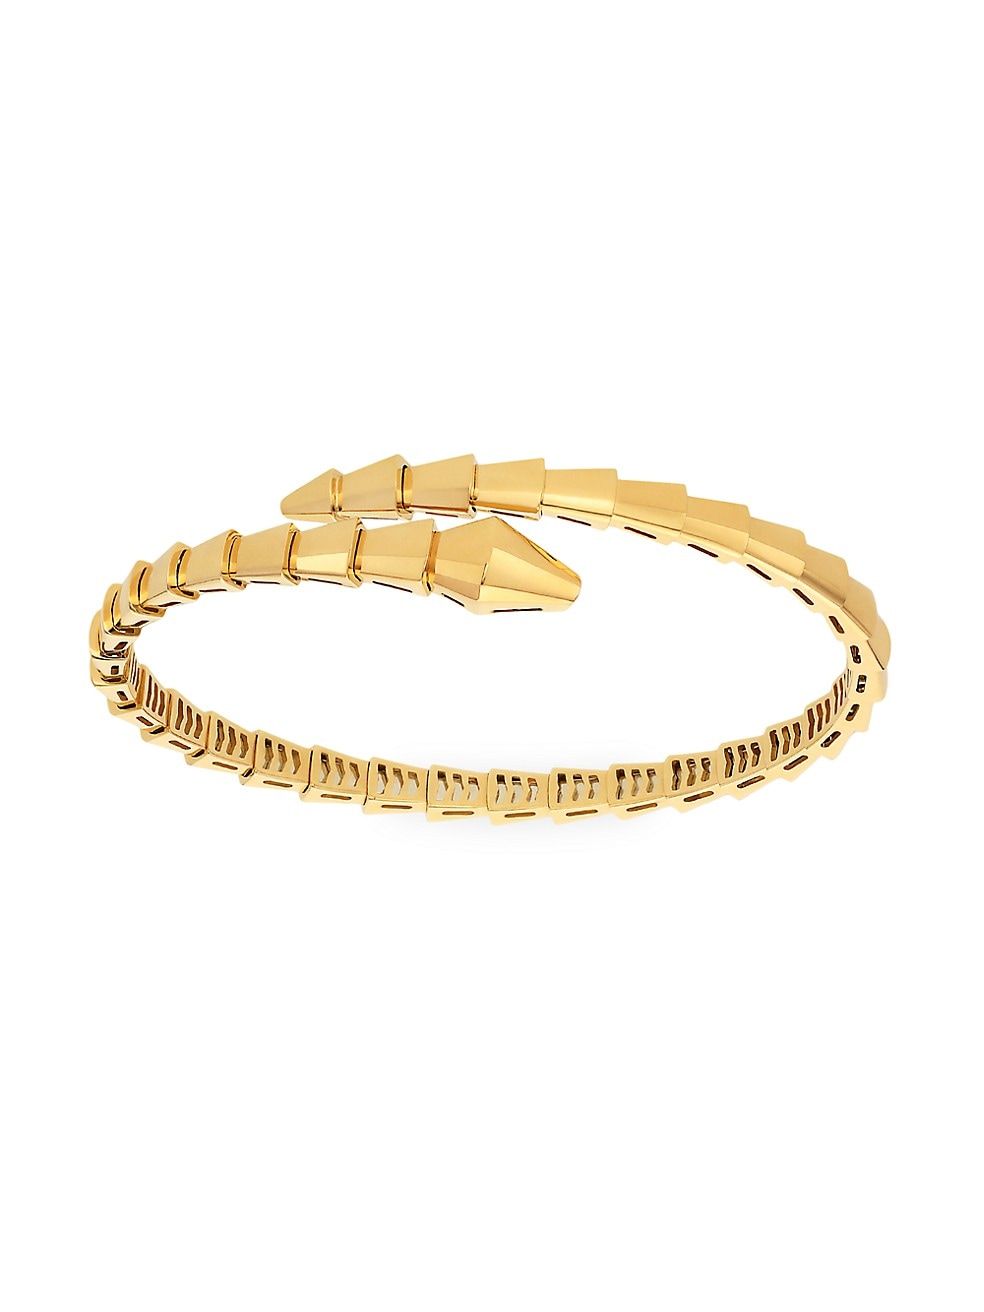 BVLGARI Serpenti Viper 18K Yellow Gold Wrap Bracelet | Saks Fifth Avenue